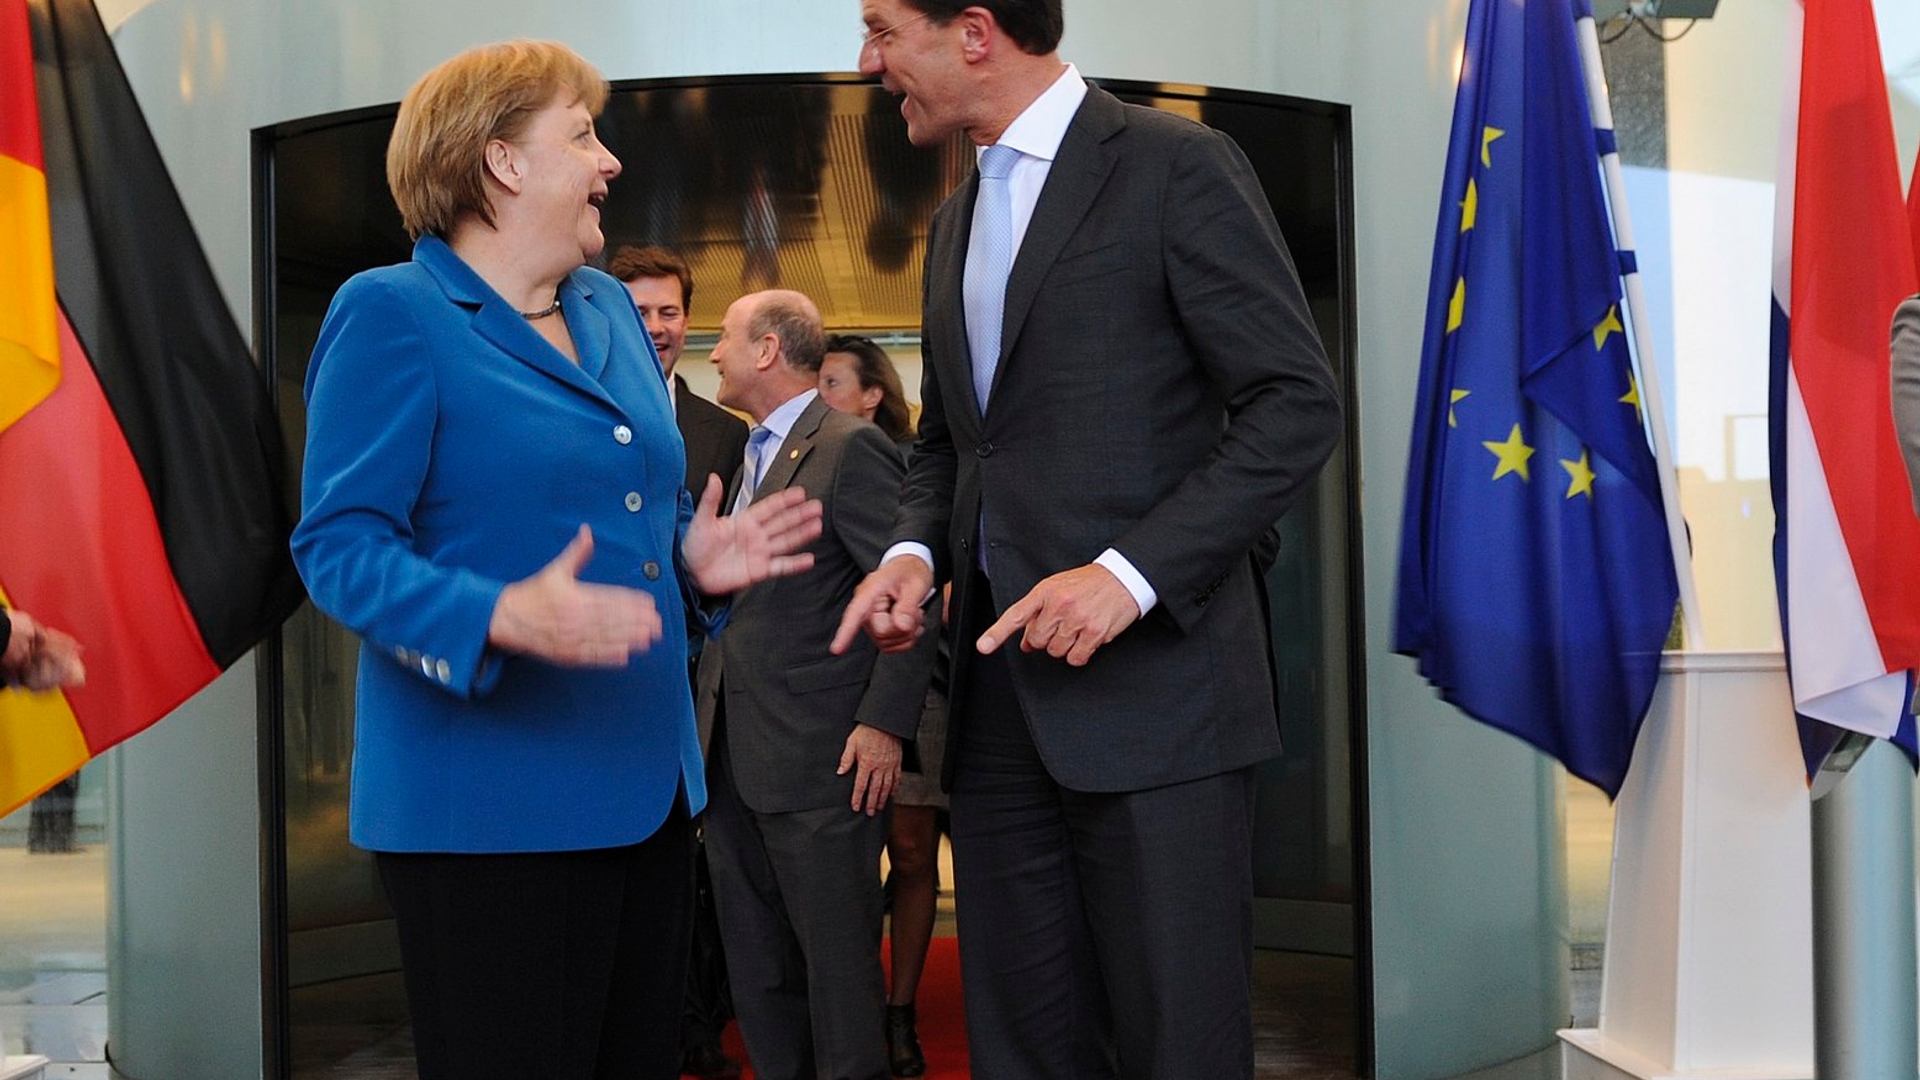 1556px-Mark_Rutte_and_Angela_Merkel_2012_(cropped)